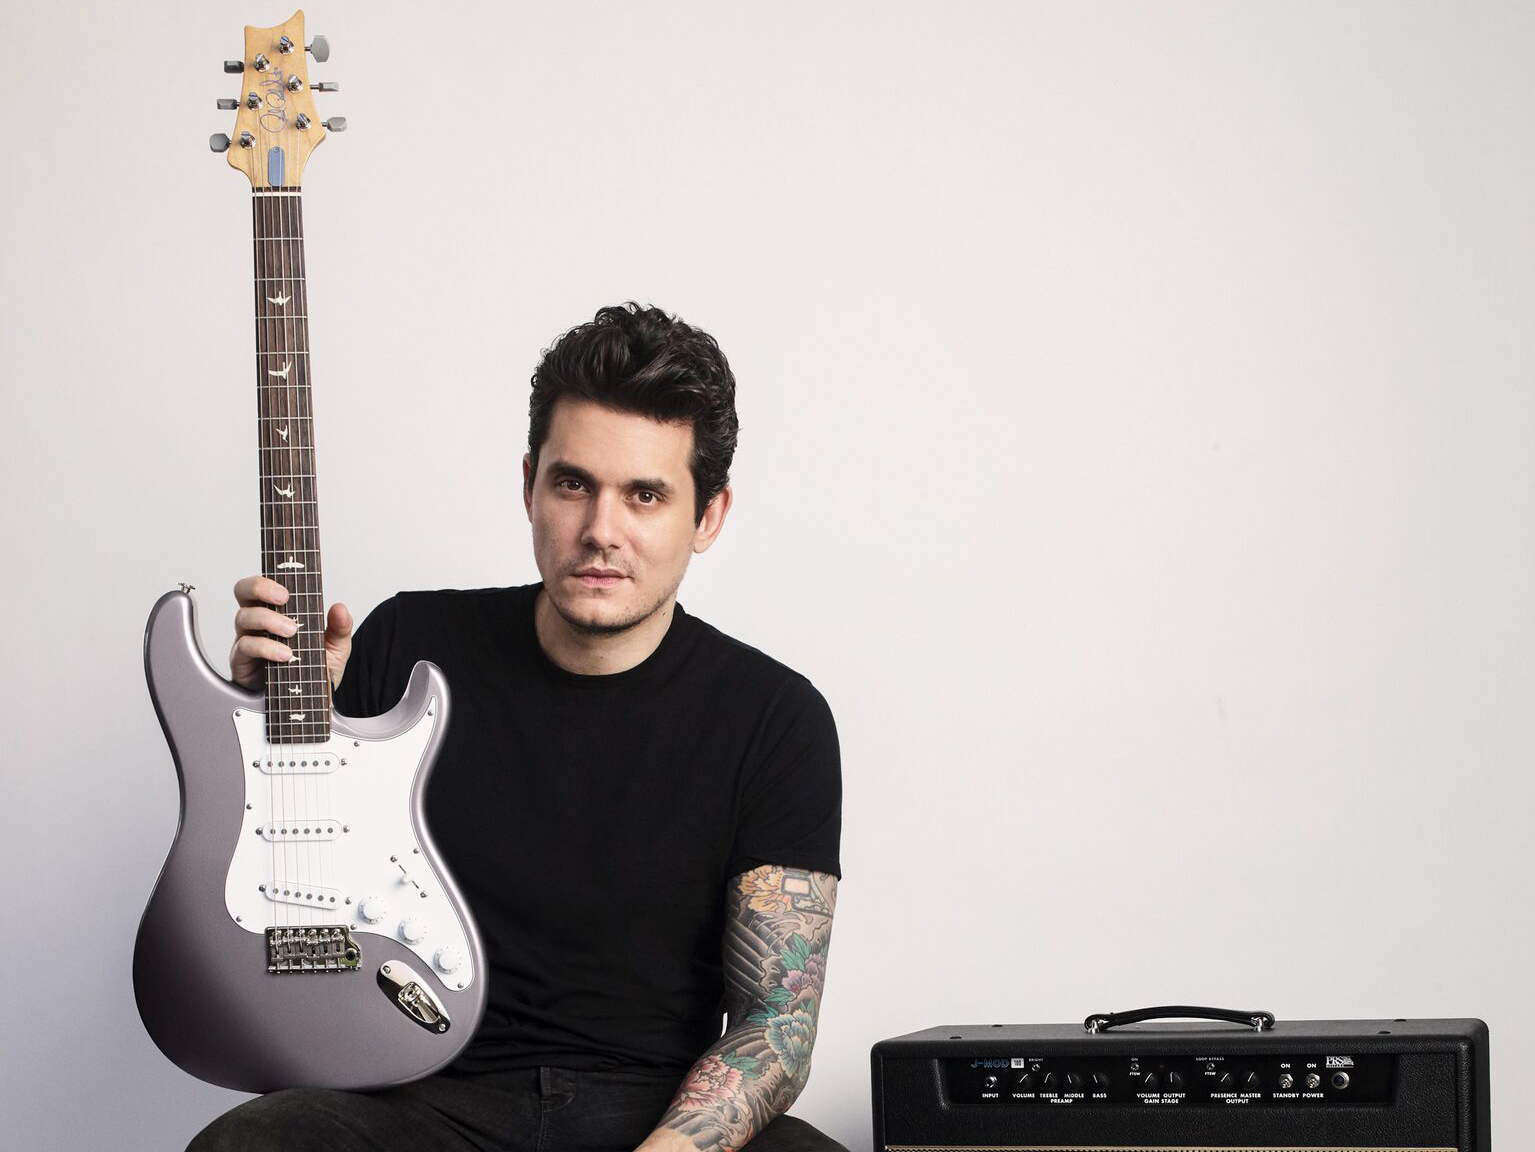 John Mayer finally reveals his signature PRS axe